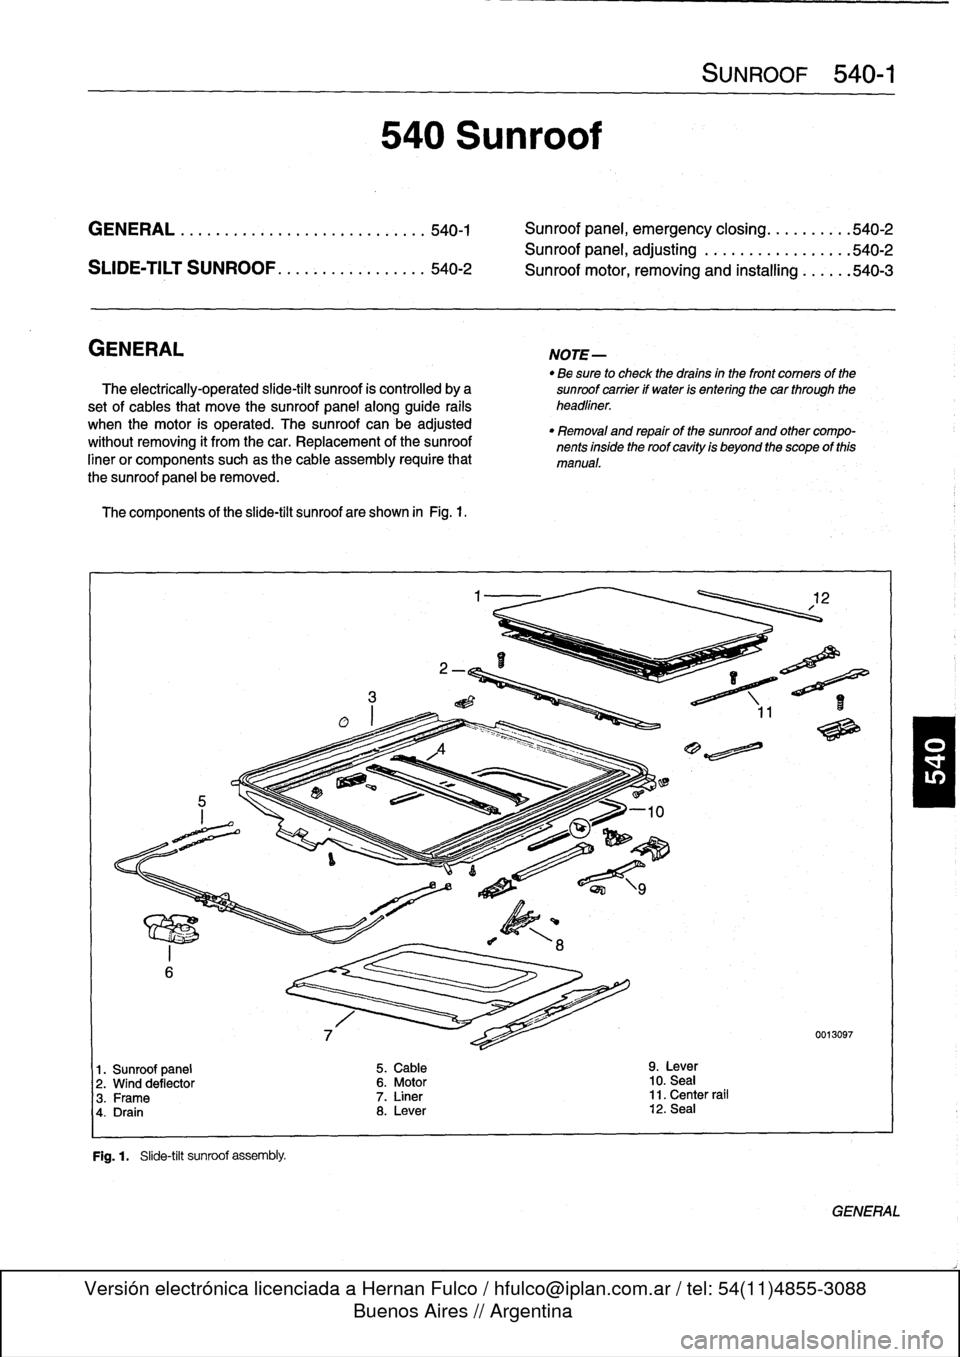 BMW 318i 1998 E36 Workshop Manual 
GENERAL
...
.
.
.
.
.
................
.
.
.
.
540-1

	

Sunroof
panel,
emergency
closing
.......
.
.
.540-2

Sunroof
panel,
adjusting
..
.
...........
.
.
.540-2

SUDE-TILT
SUNROOF
.
.
.
.
.
.
.
.
.